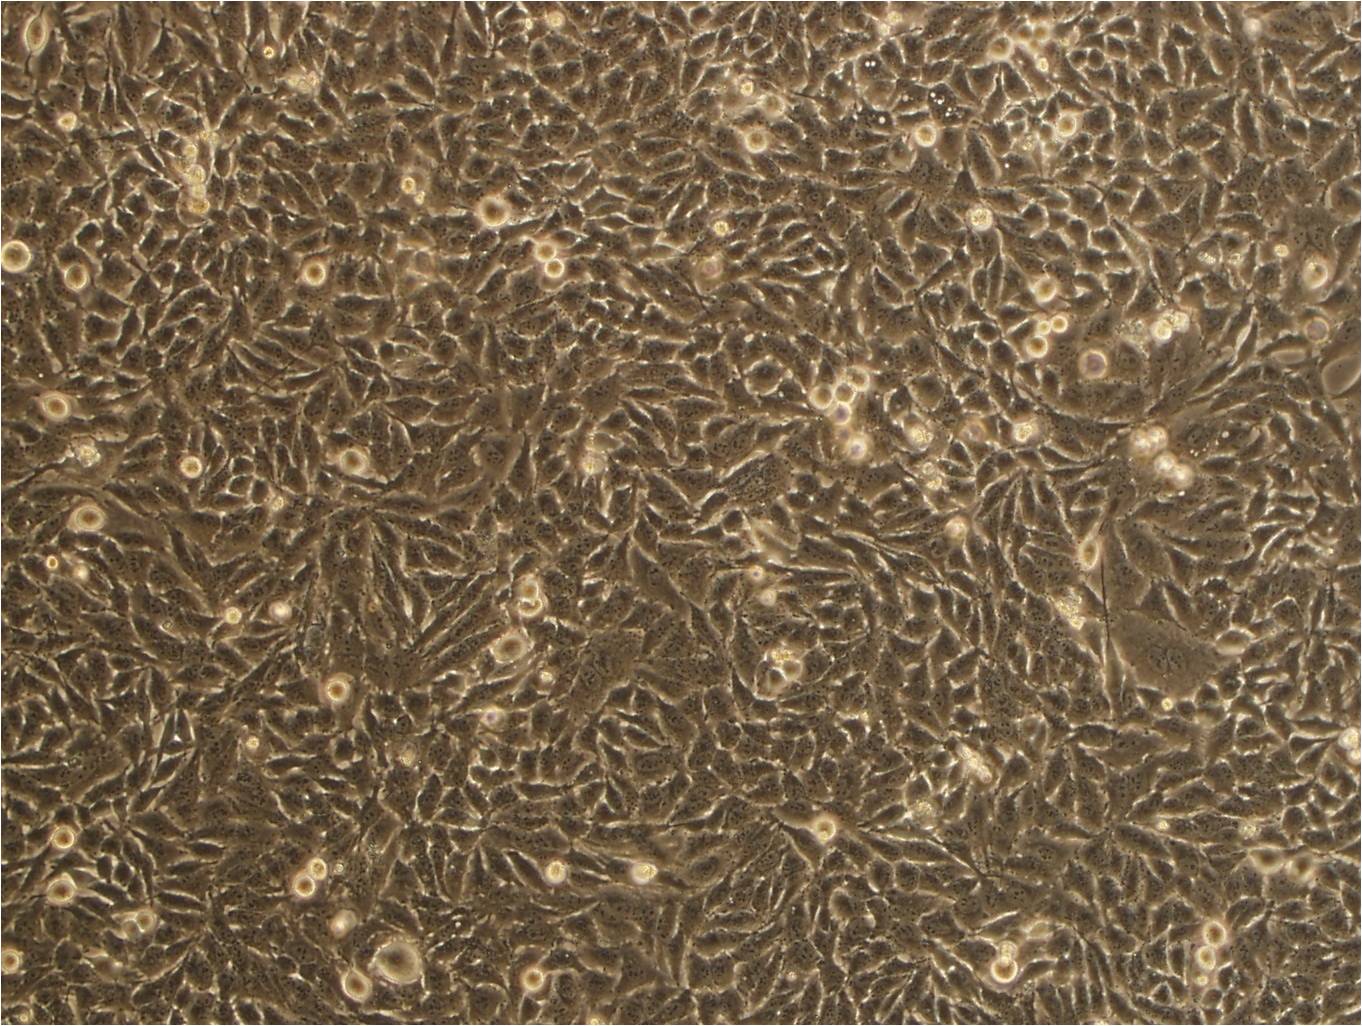 TE-14 Fresh Cells|人食管癌细胞(送STR基因图谱)